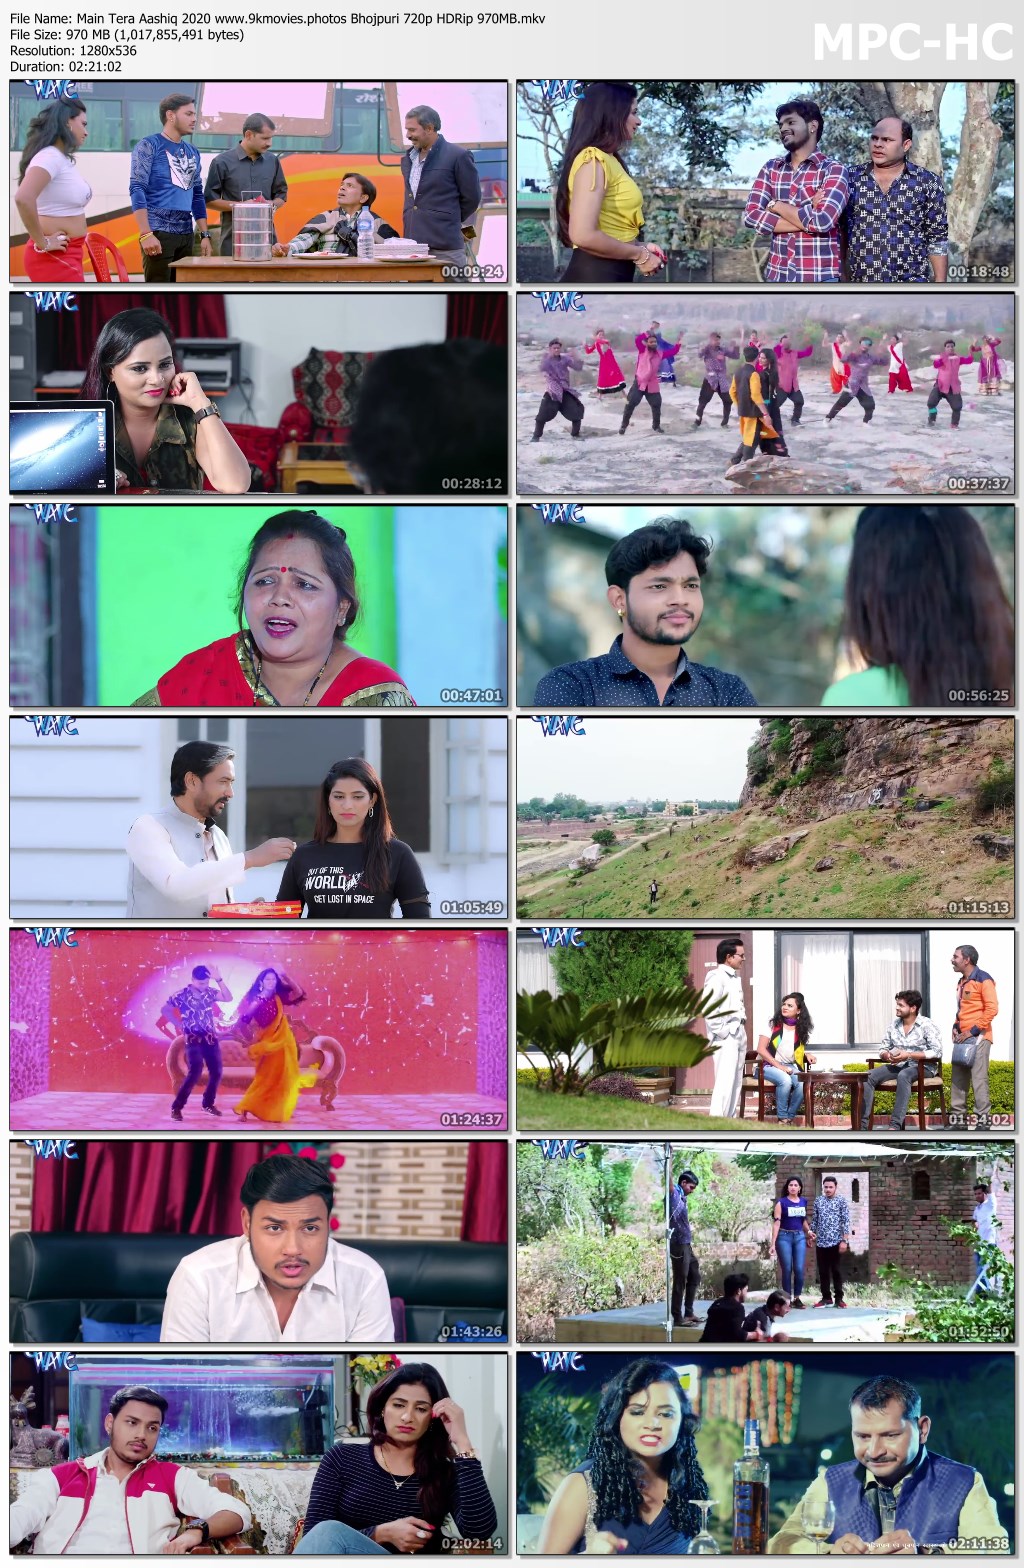 Main Tera Aashiq 2020 www.9kmovies.photos Bhojpuri 720p HDRip 970MB.mkv thumbs